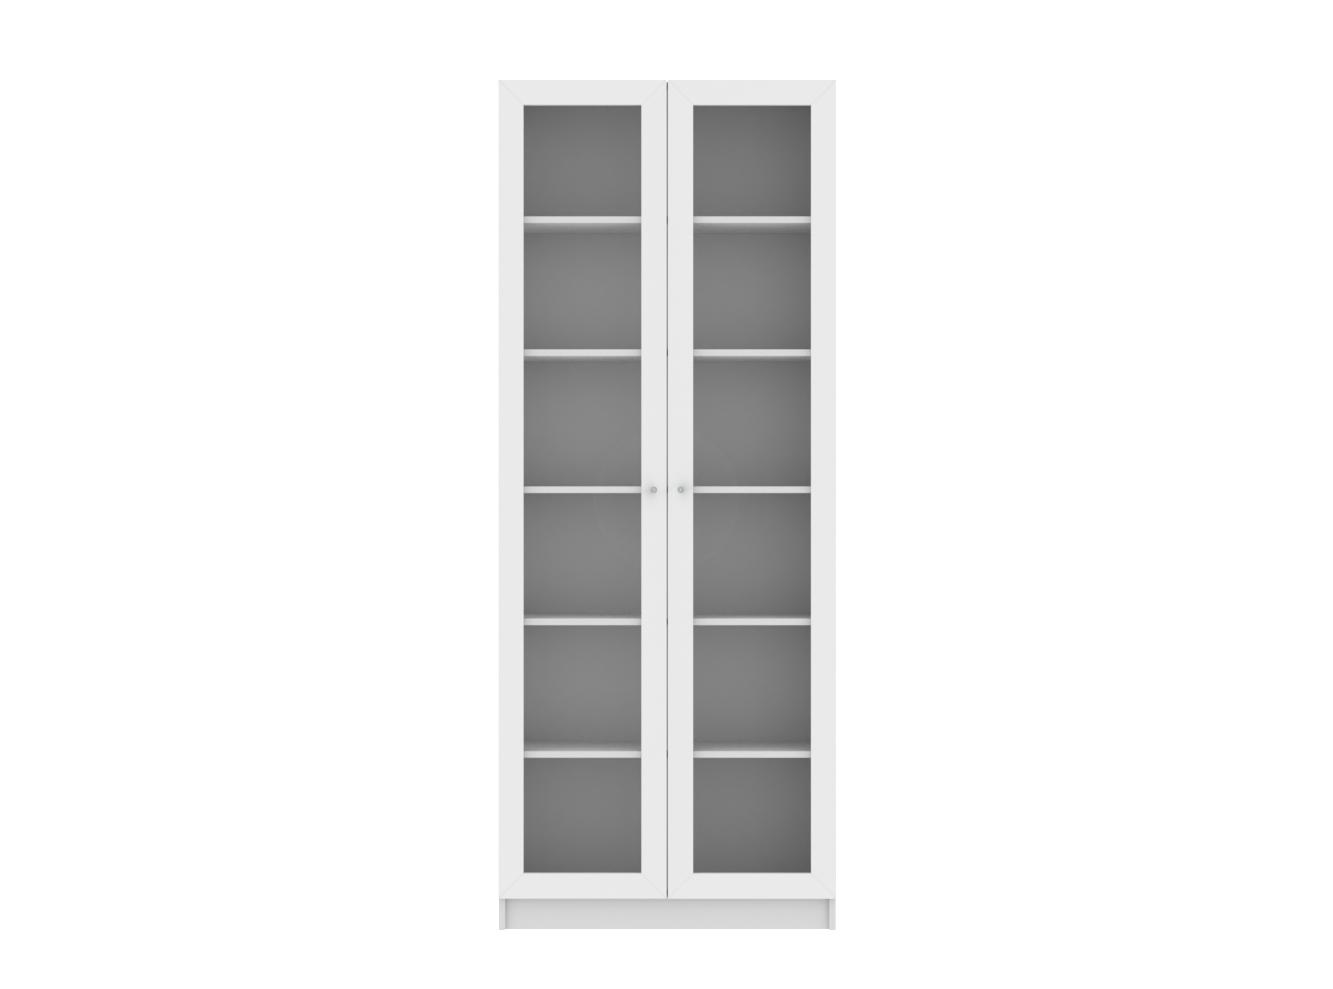  Книжный шкаф Билли 336 white ИКЕА (IKEA) изображение товара